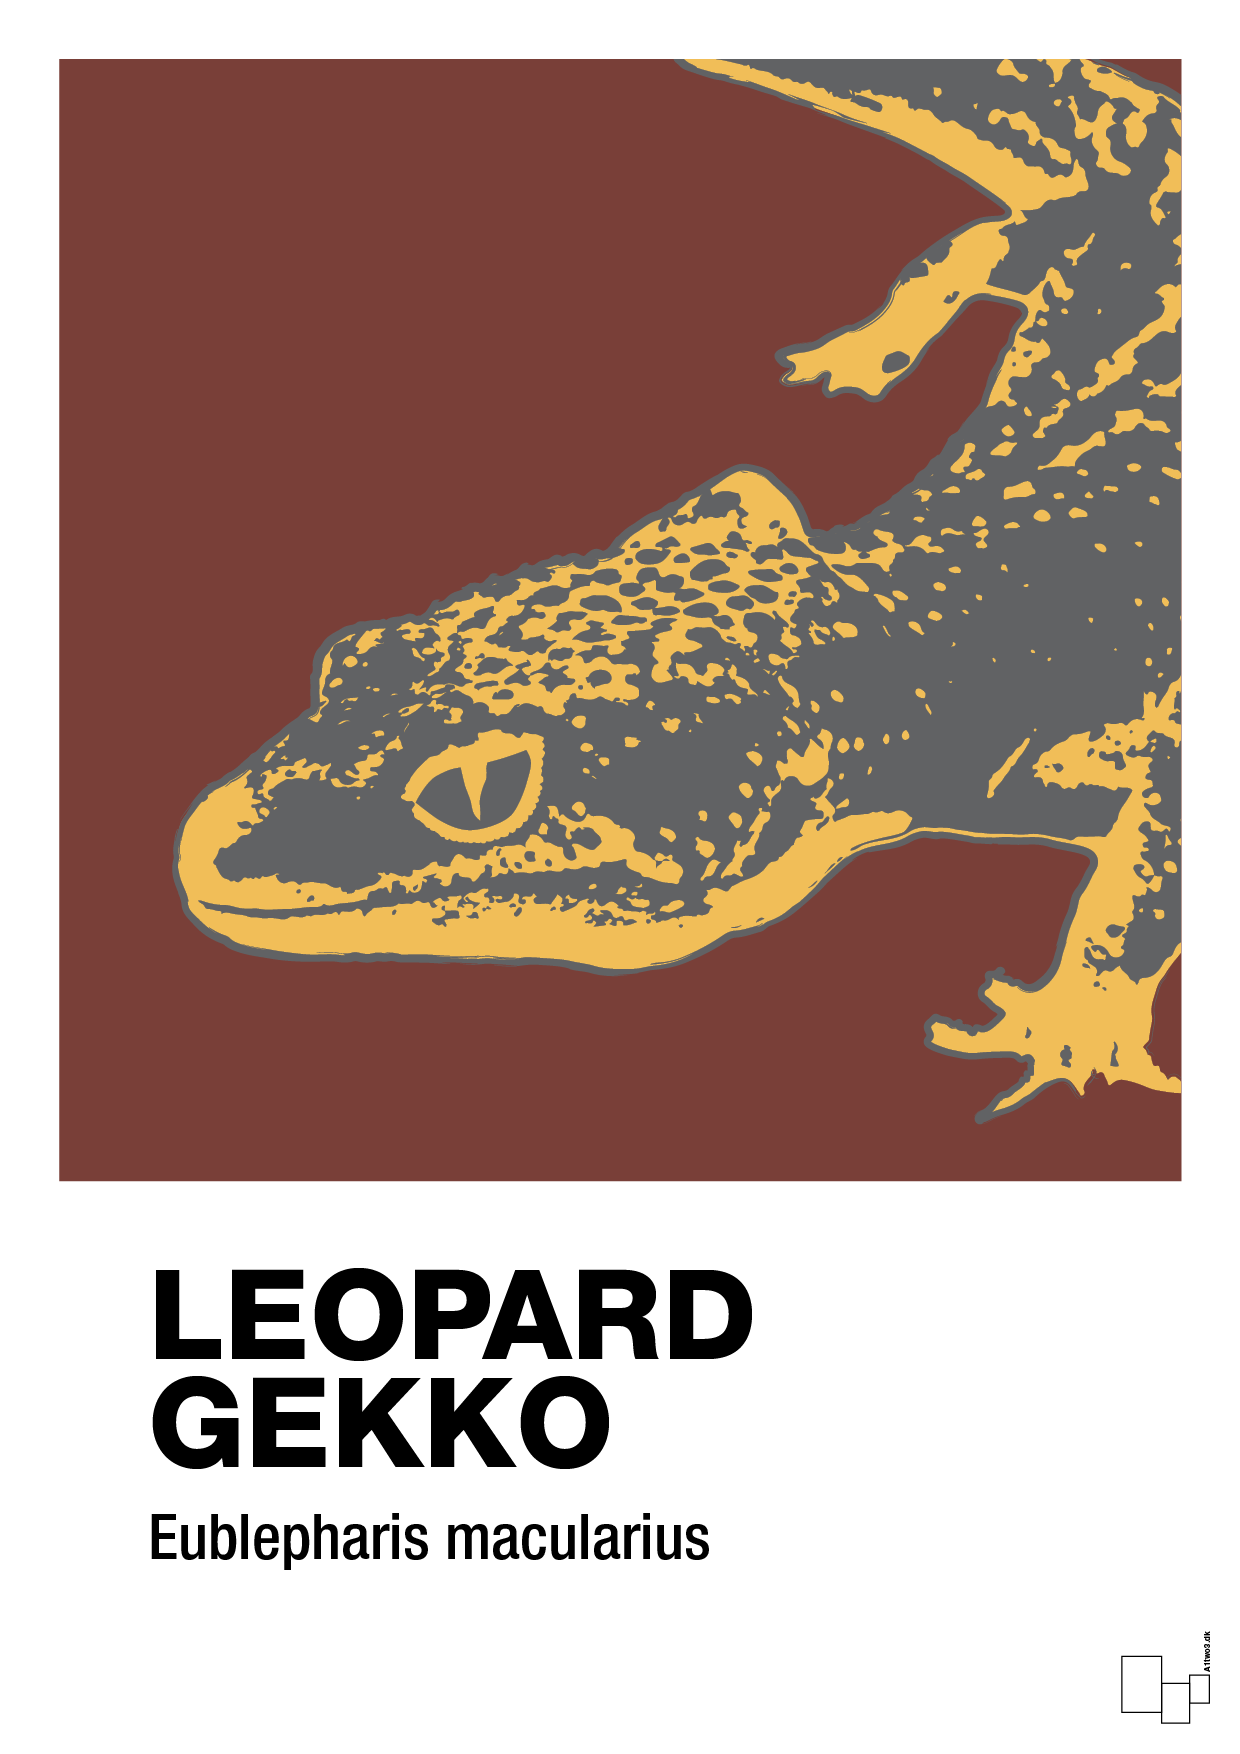 leopard gekko - Plakat med Videnskab i Red Pepper